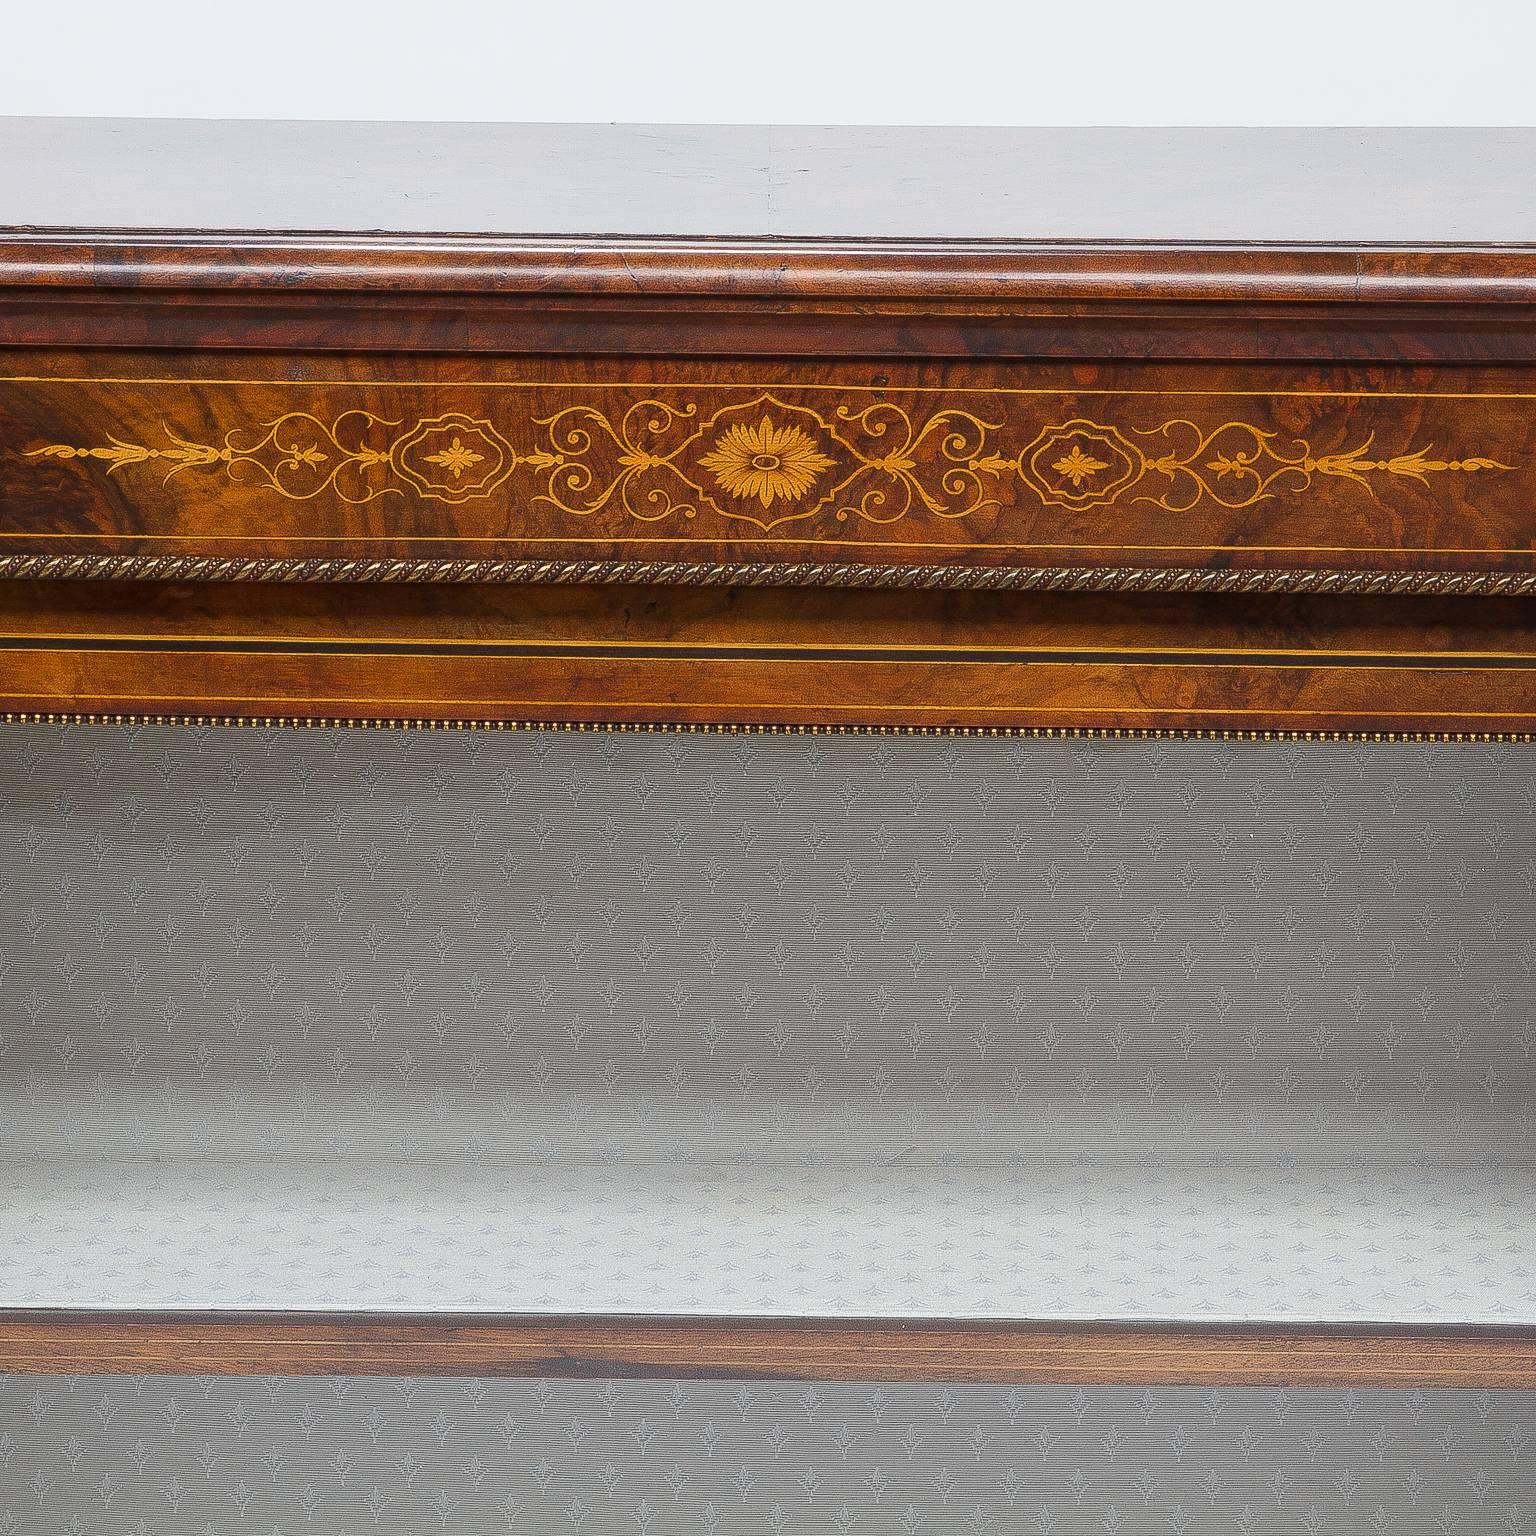 Edwardian 19th Century English Inlaid Narrow Cabinet